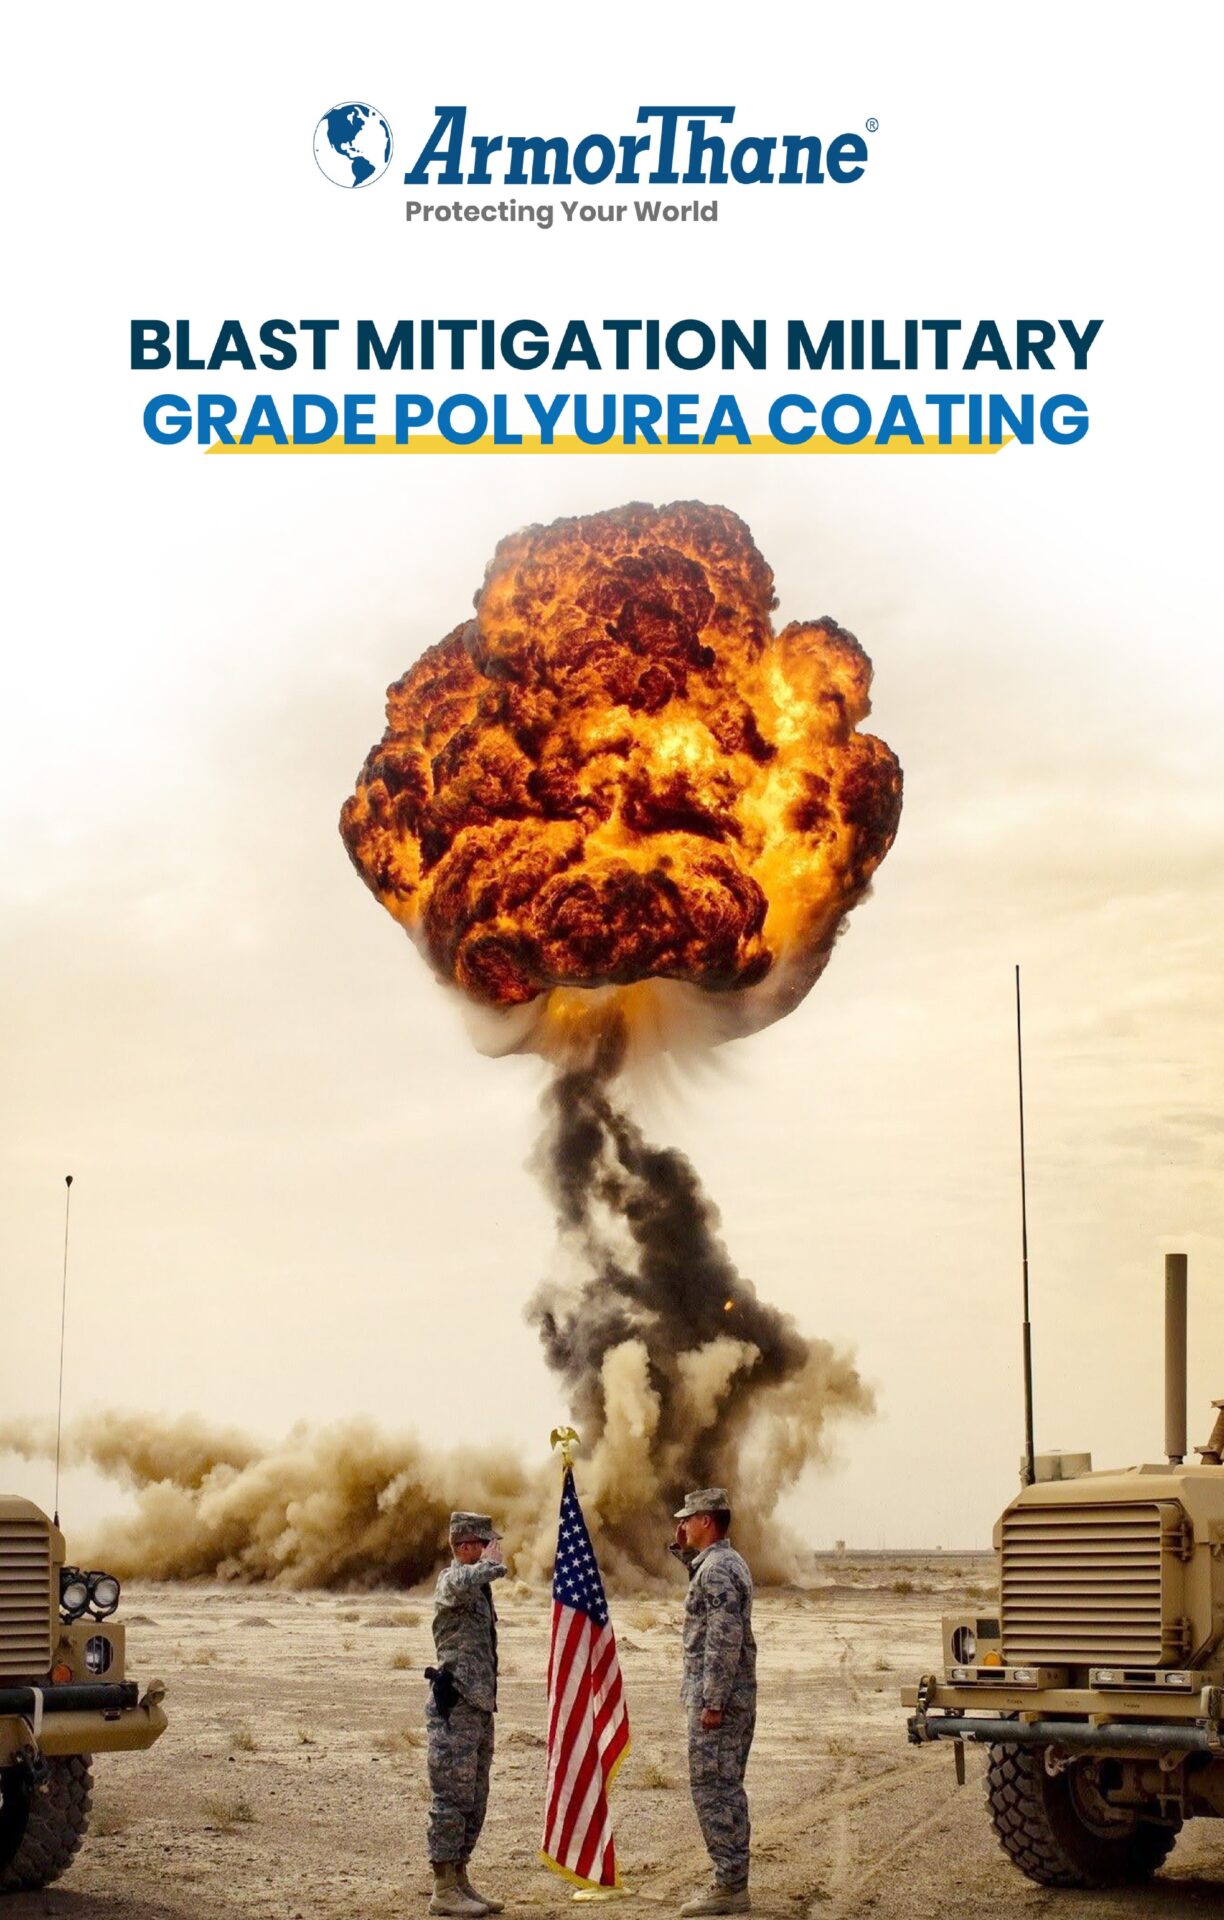 ArmorThane Blast Mitigation Brochure 1 pdf min